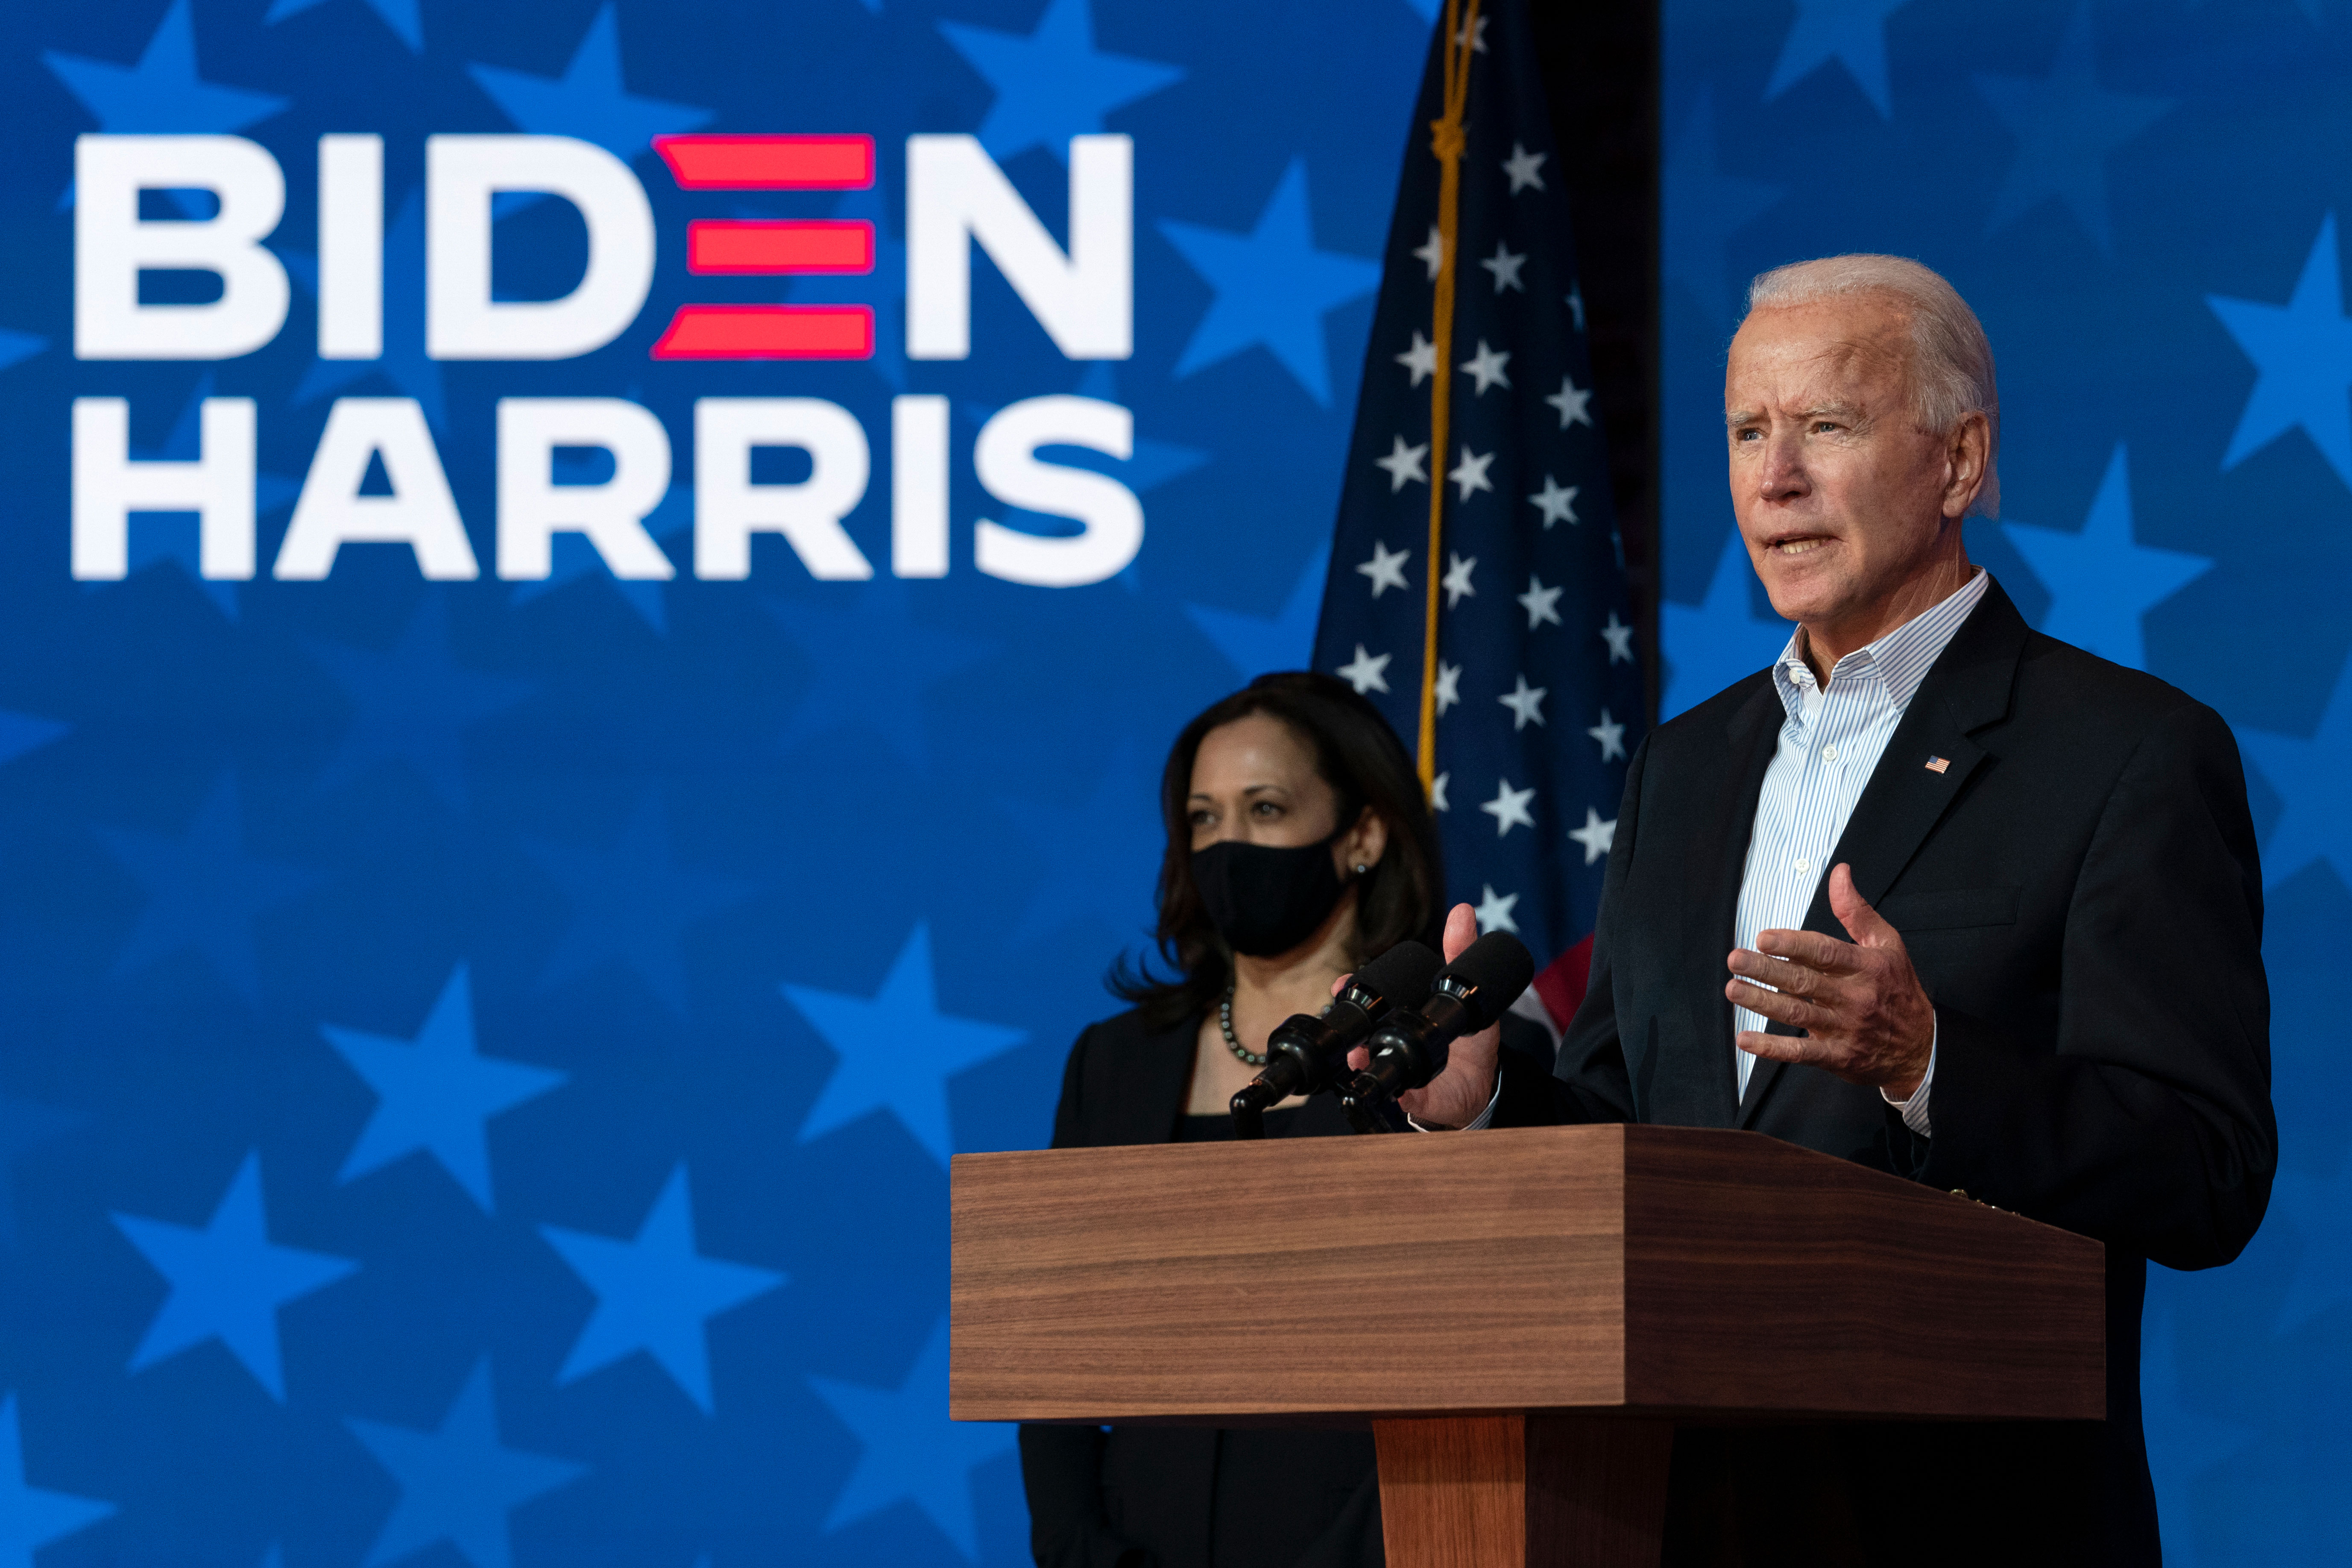 Democratic presidential nominee Joe Biden is joined by his running mate, US Sen. Kamala Harris, as he delivers remarks in Wilmington, Delaware, on November 5.